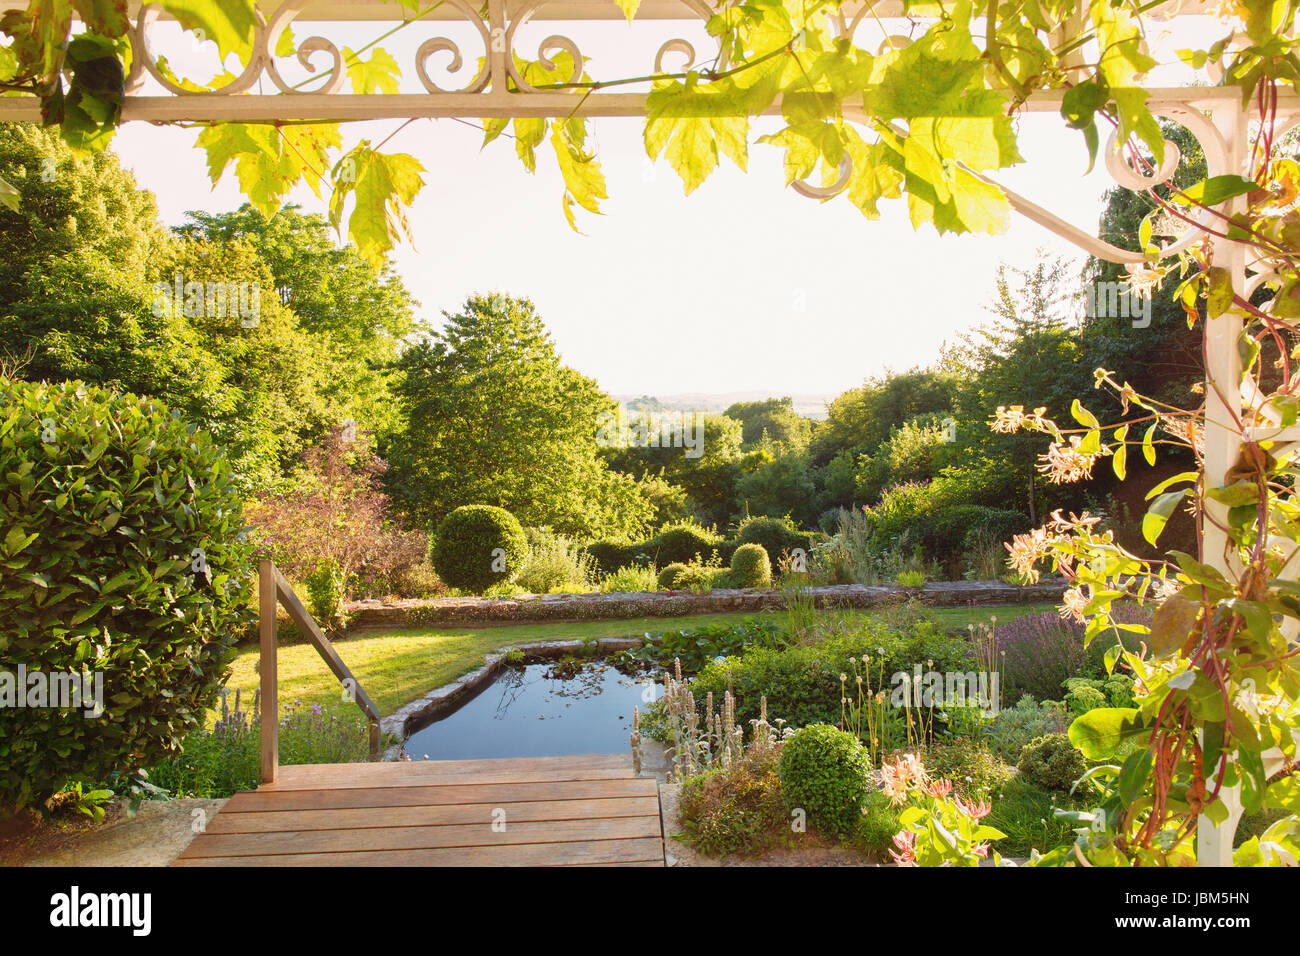 Ruhige, sonnige grüne Sommergarten mit Swimming pool Stockfoto